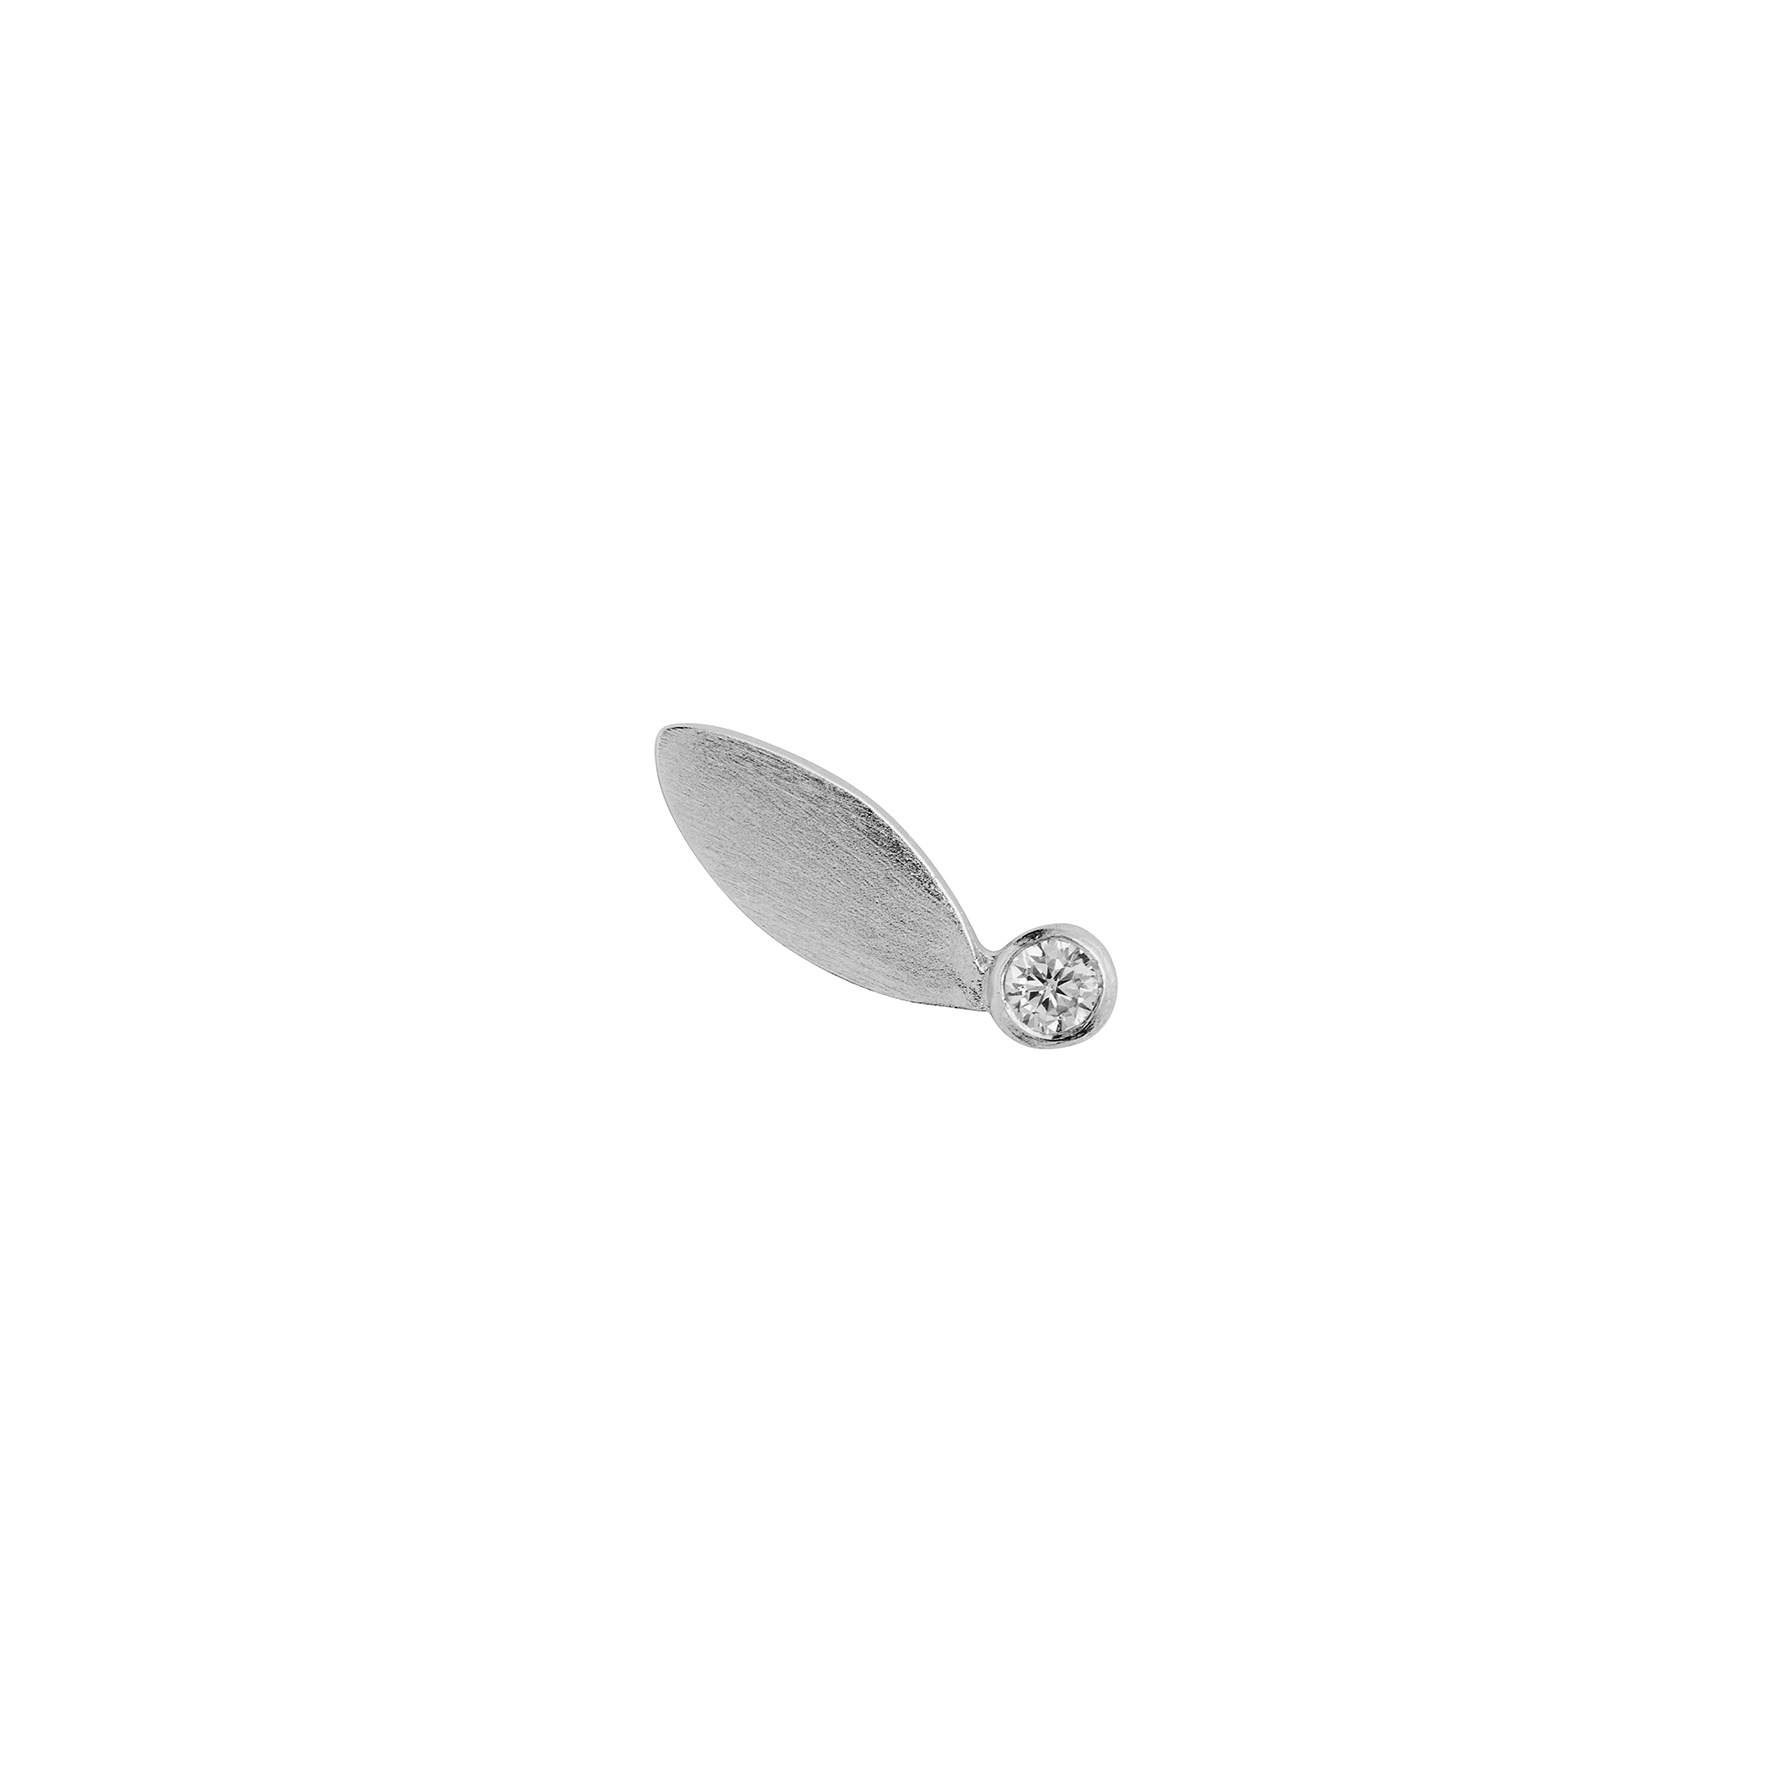 Big Dot Leaf Earstick Light Peridot von STINE A Jewelry in Silber Sterling 925|Matt